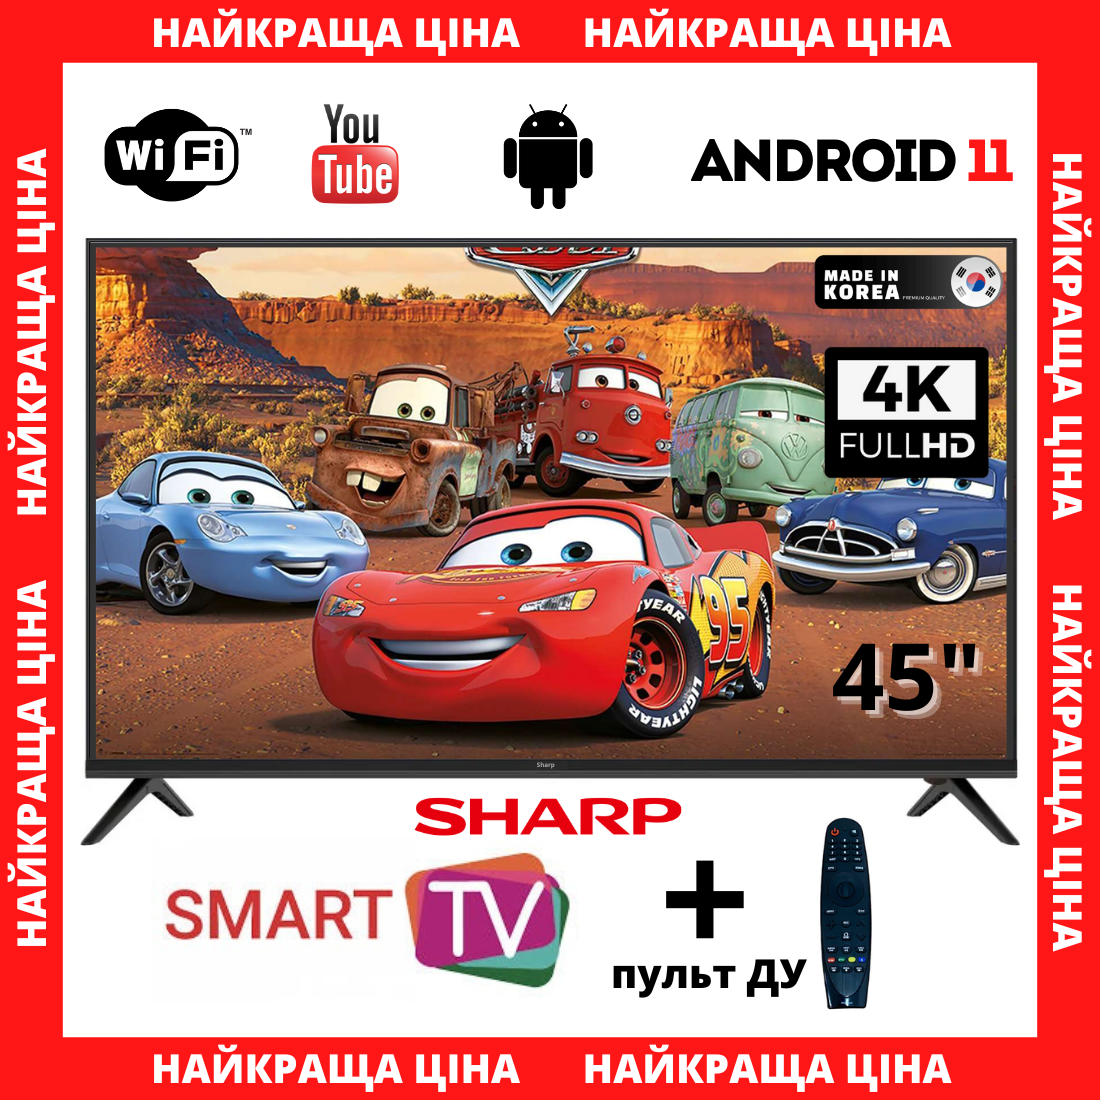 Телевізор Sharp 45" Smart-TV/Full HD/DVB-T2/USB Android 11 + пульт ДУ